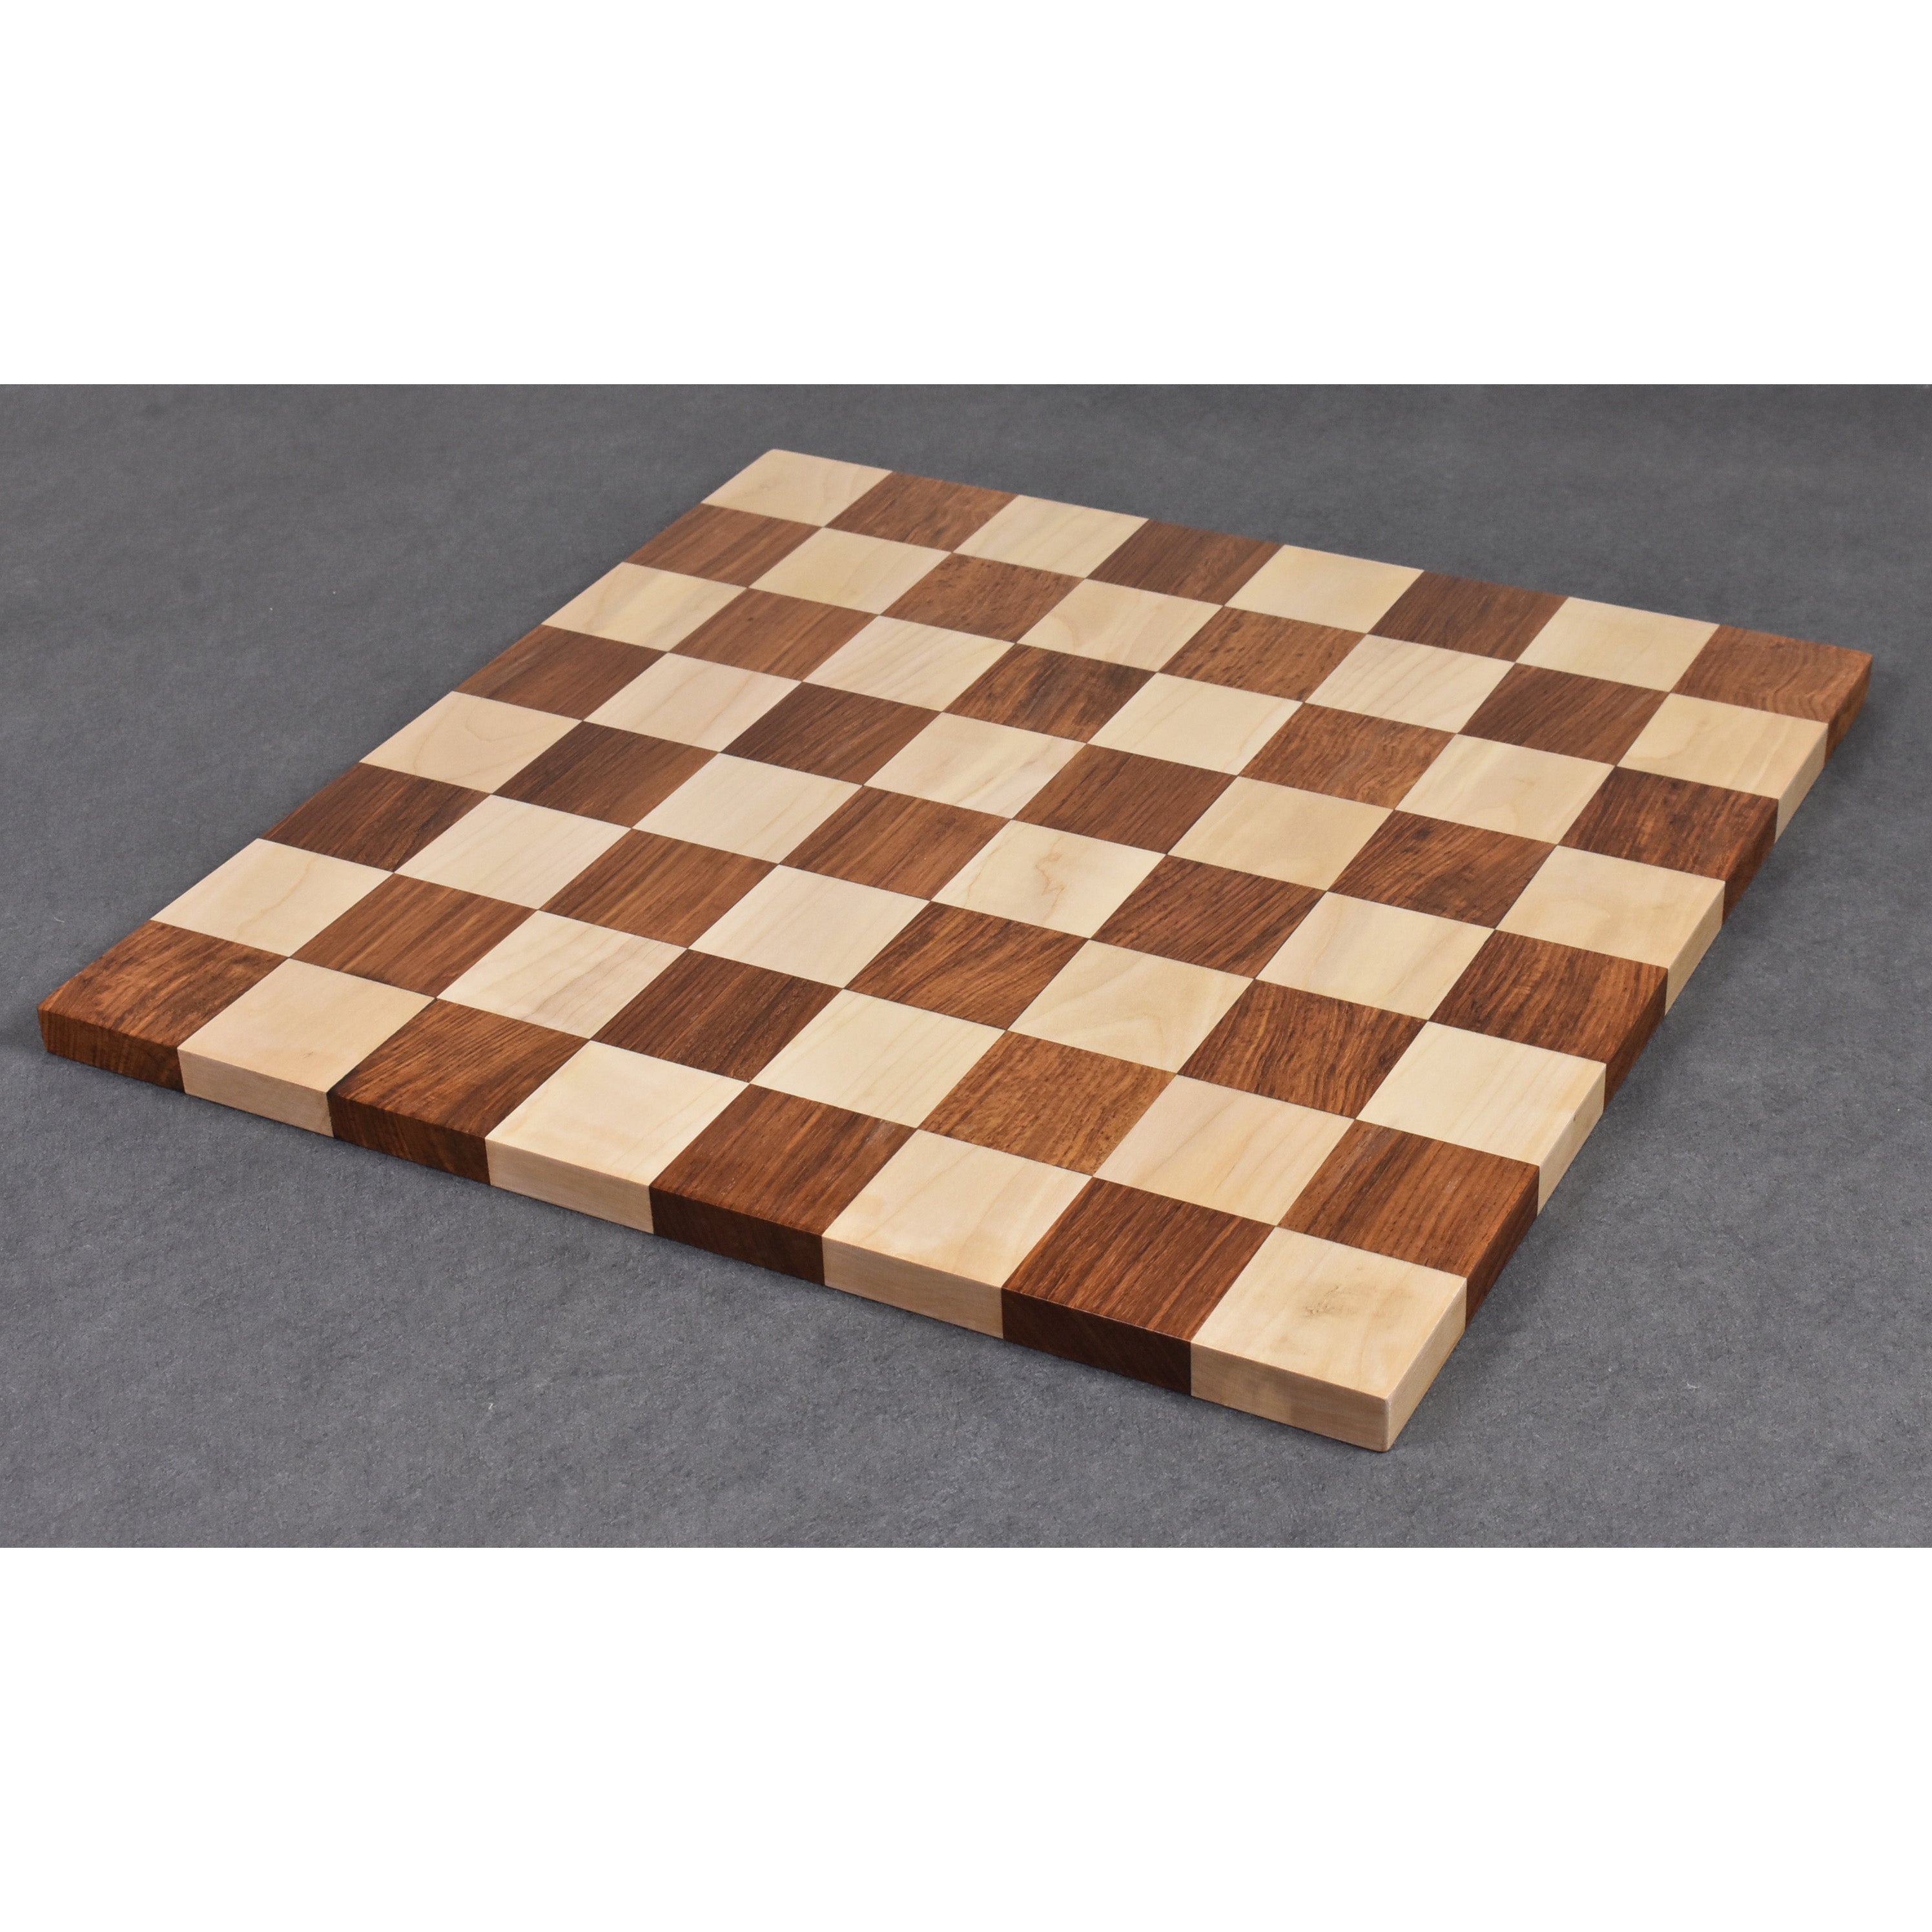 Borderless Hardwood End Grain Chess board